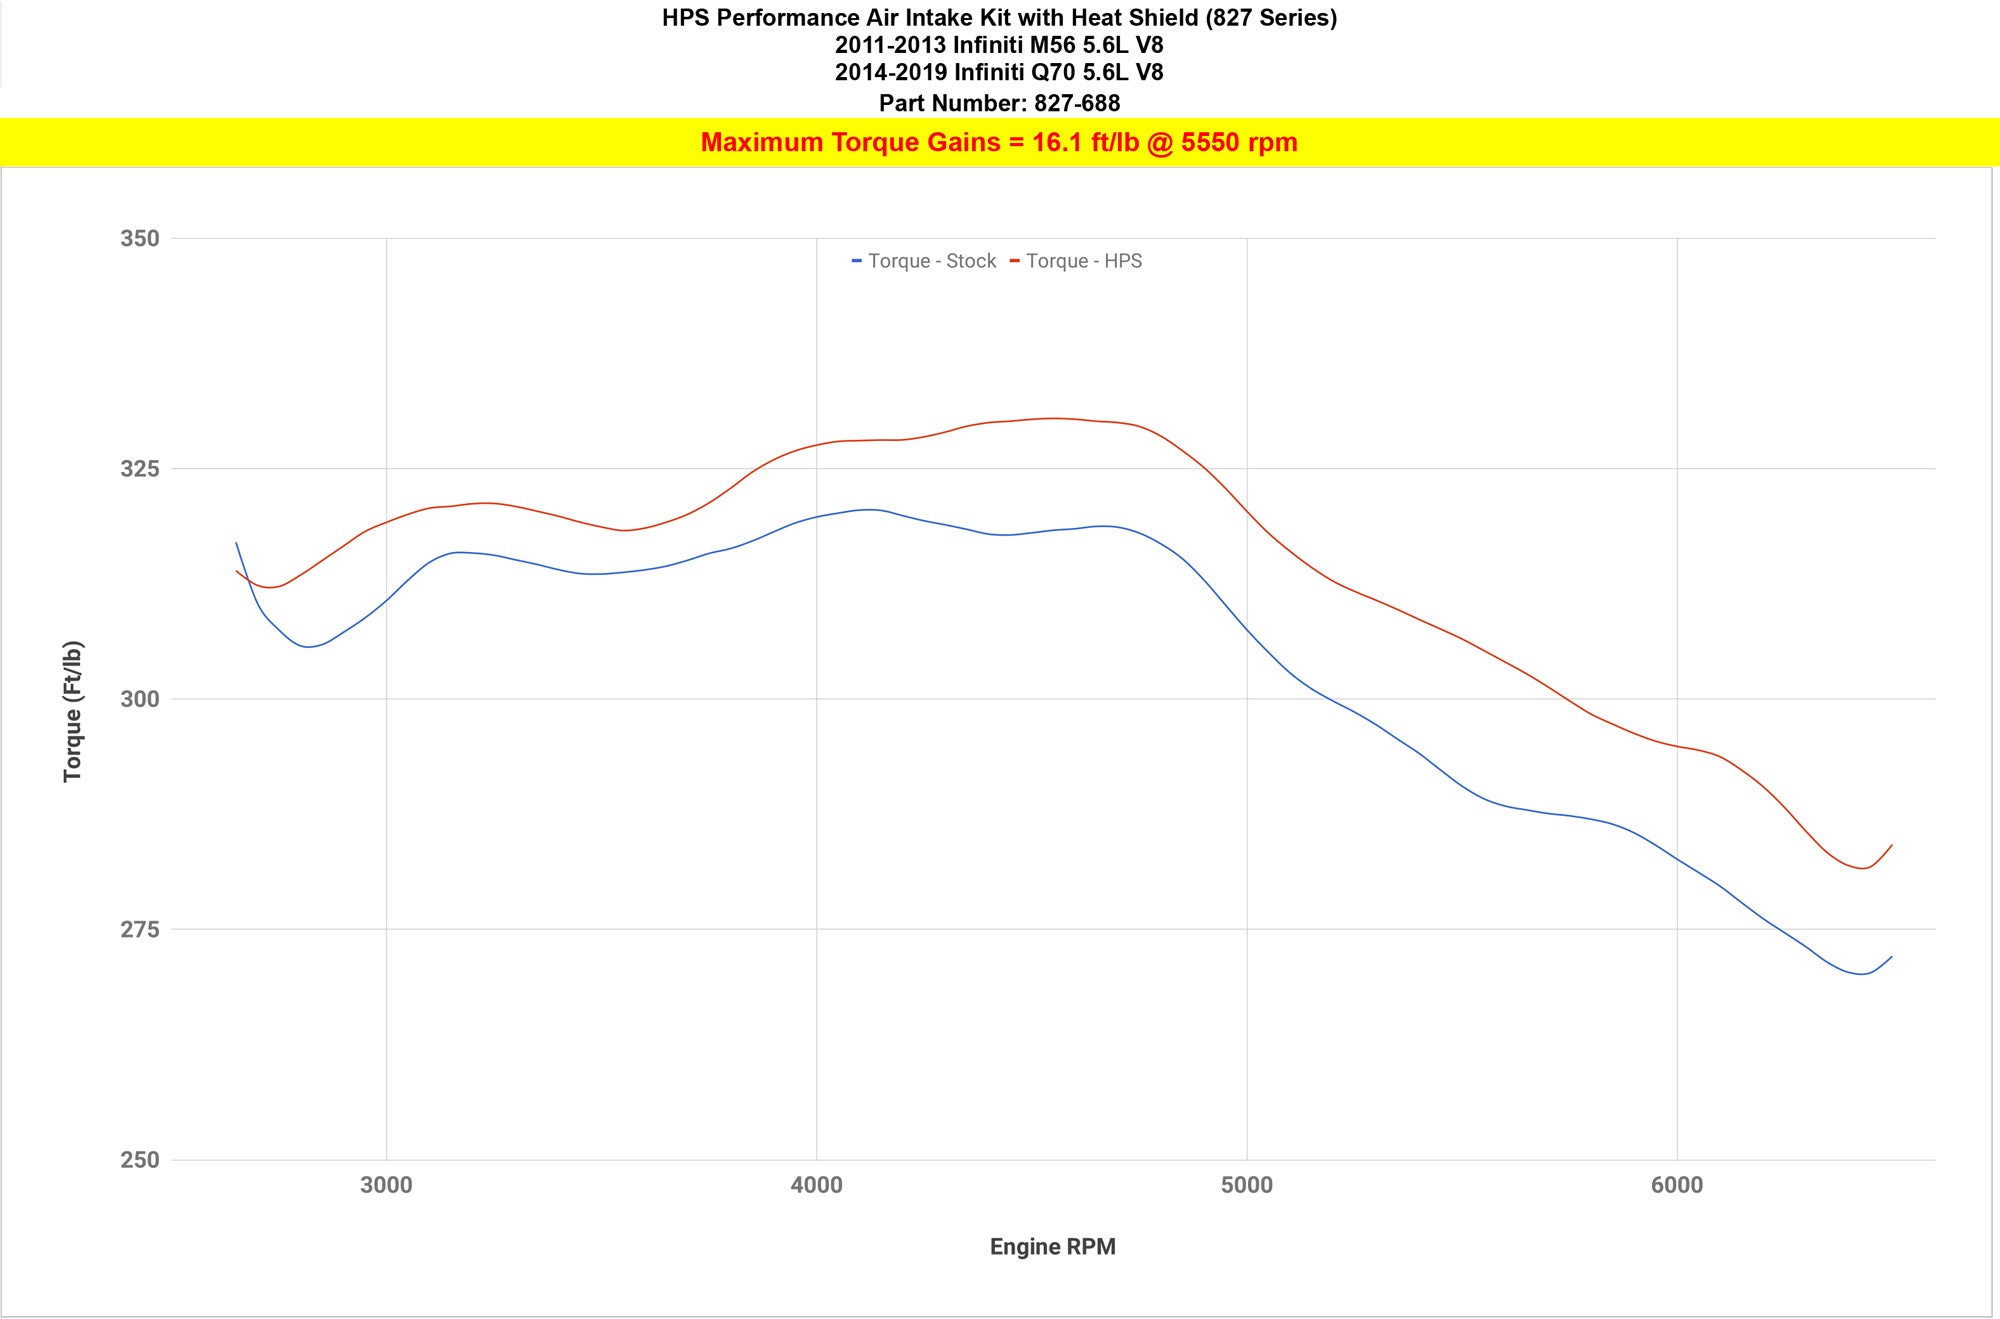 HPS Performance Cold Air Intake Kit increase +17 ft/lb torque 2011-2013 Infiniti M56 5.6L V8 827-688